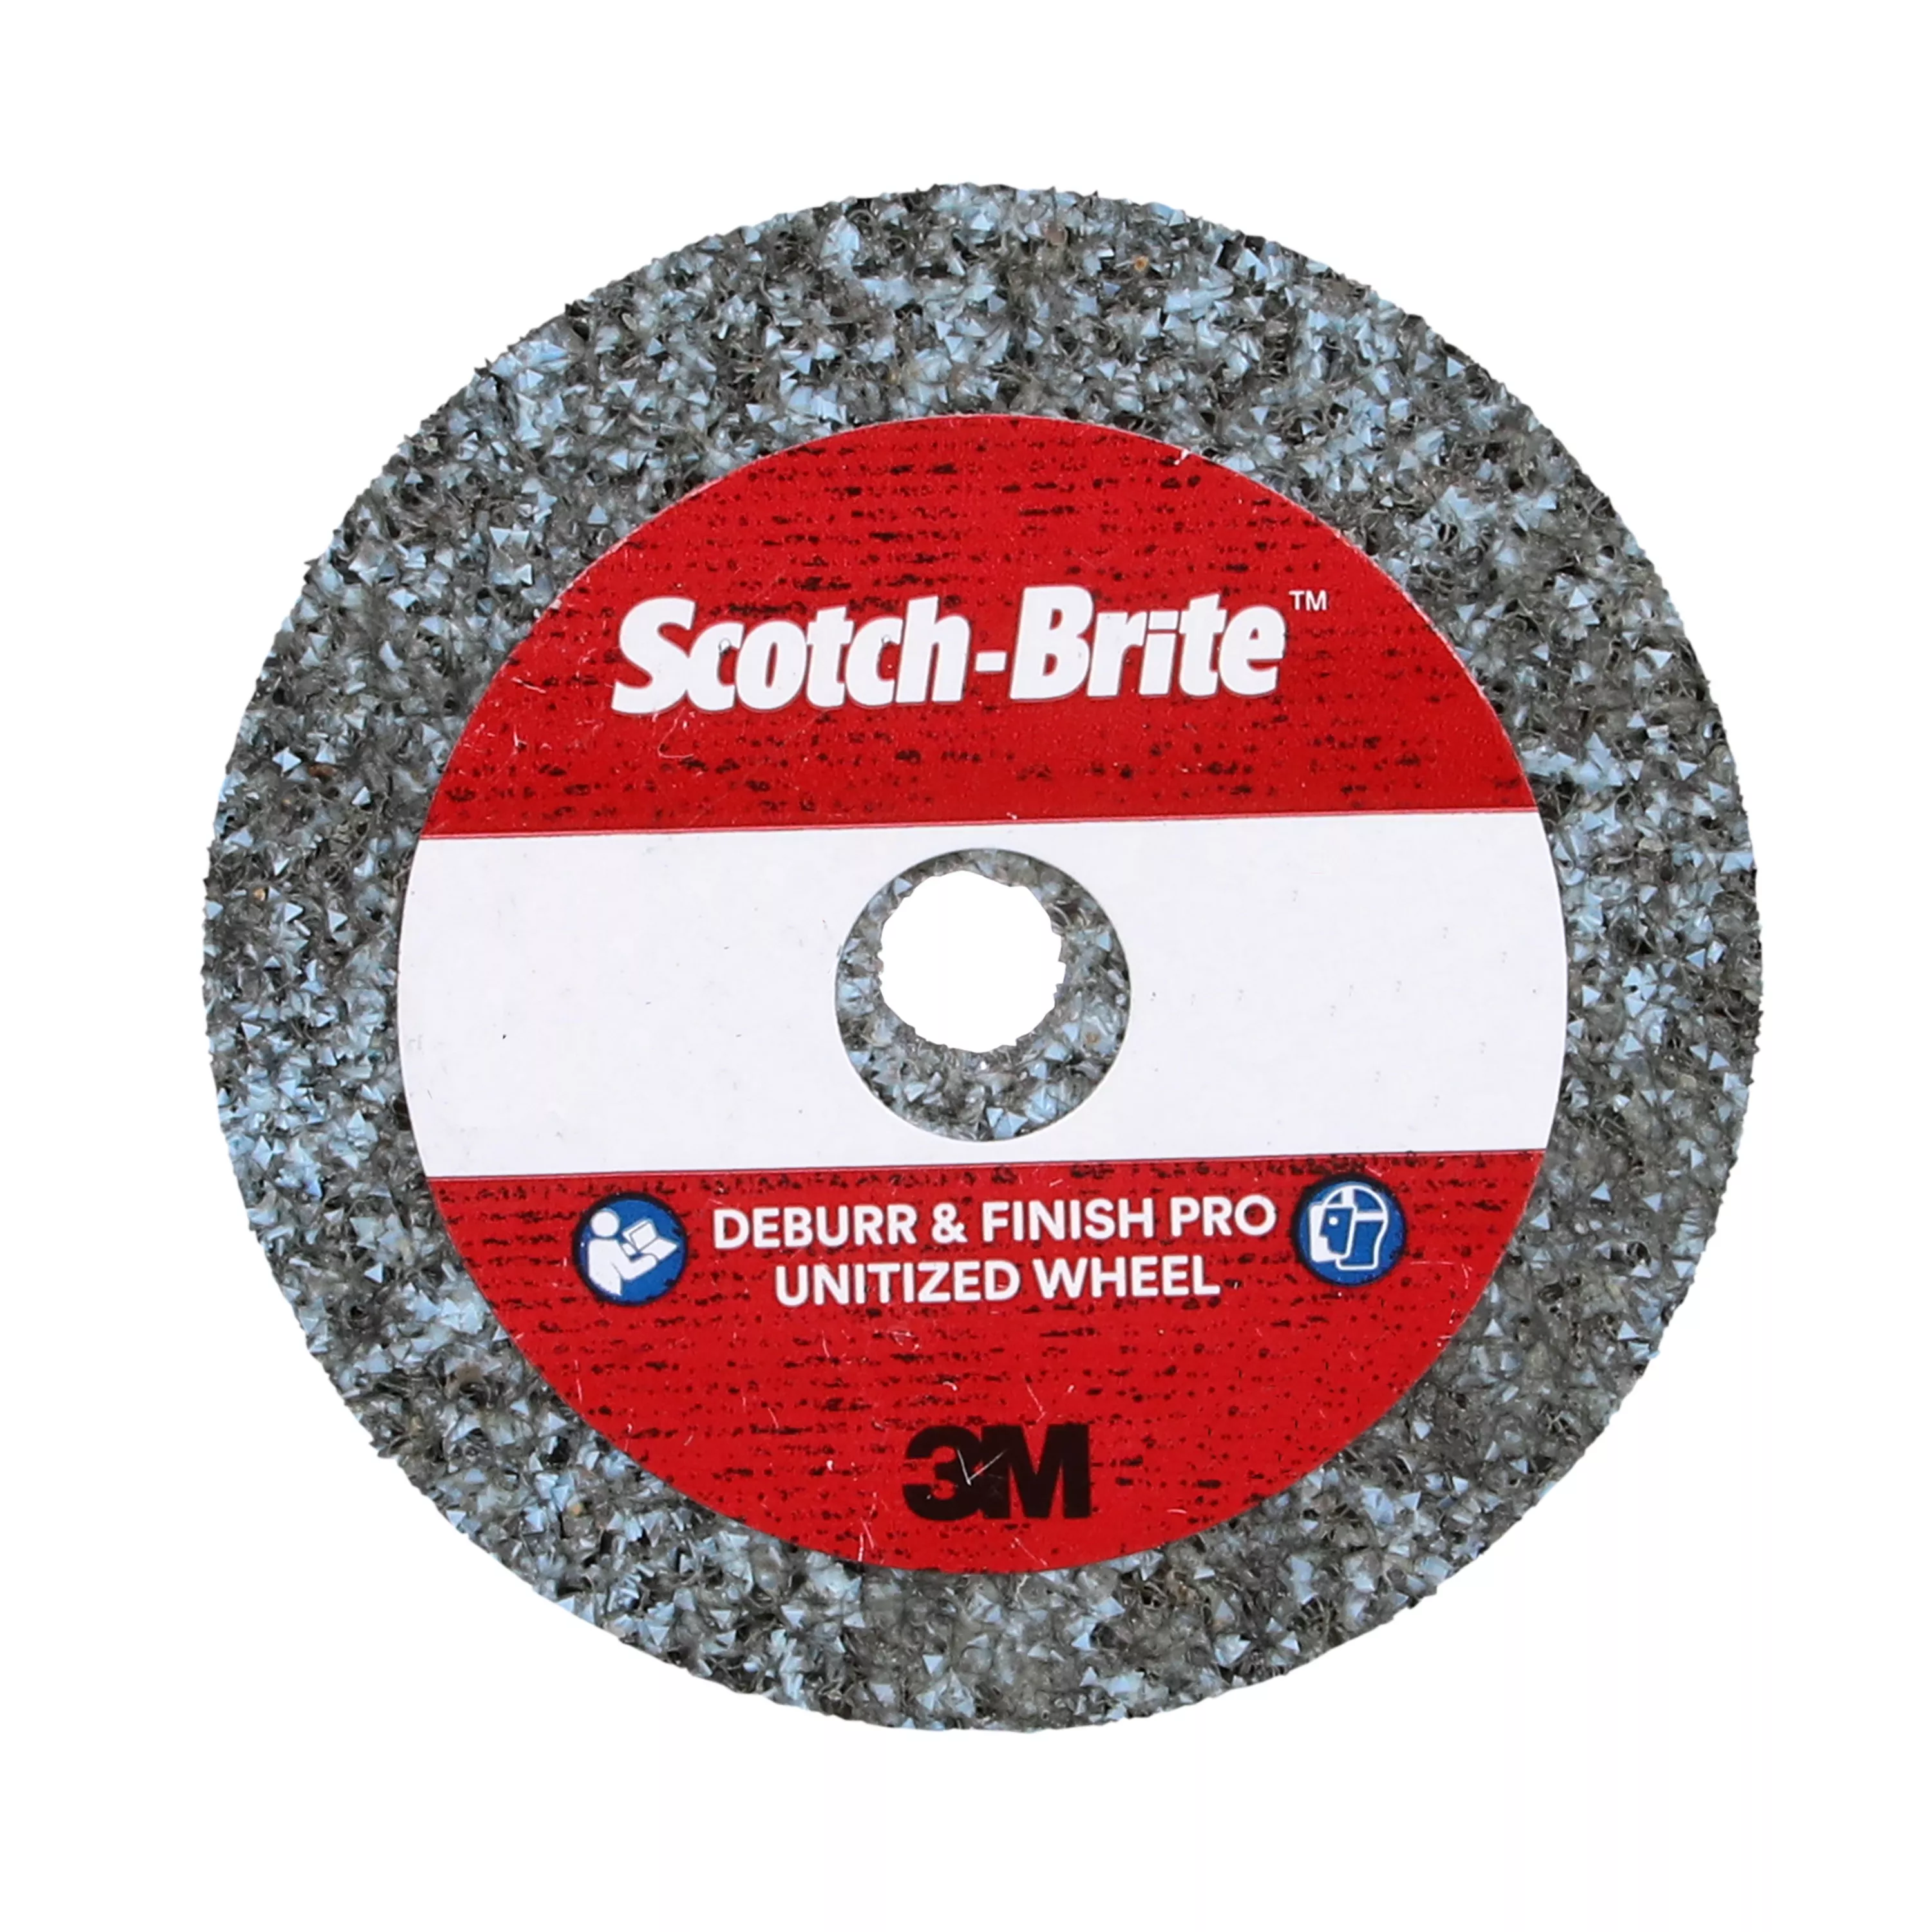 Scotch-Brite™ Deburr & Finish Pro Unitized Wheel, DP-UW, 9C Extra
Coarse+, 2 in x 1/4 in x 1/4 in, 60 ea/Case